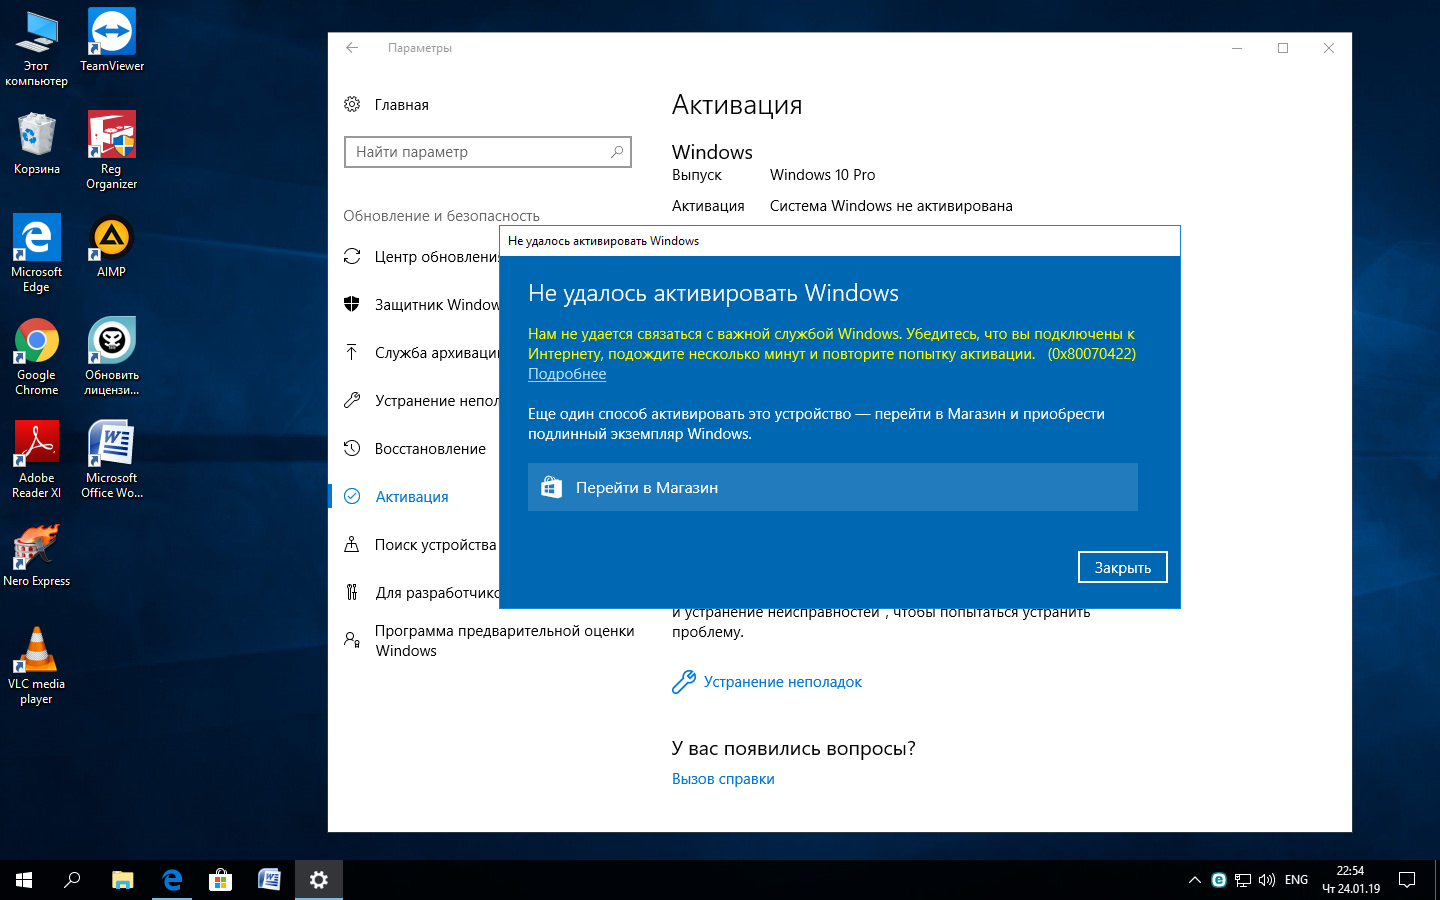 Enable windows 10. Активация активация виндовс. Активация Windows 10. Ошибка активации виндовс. Ошибка активации Windows 10.